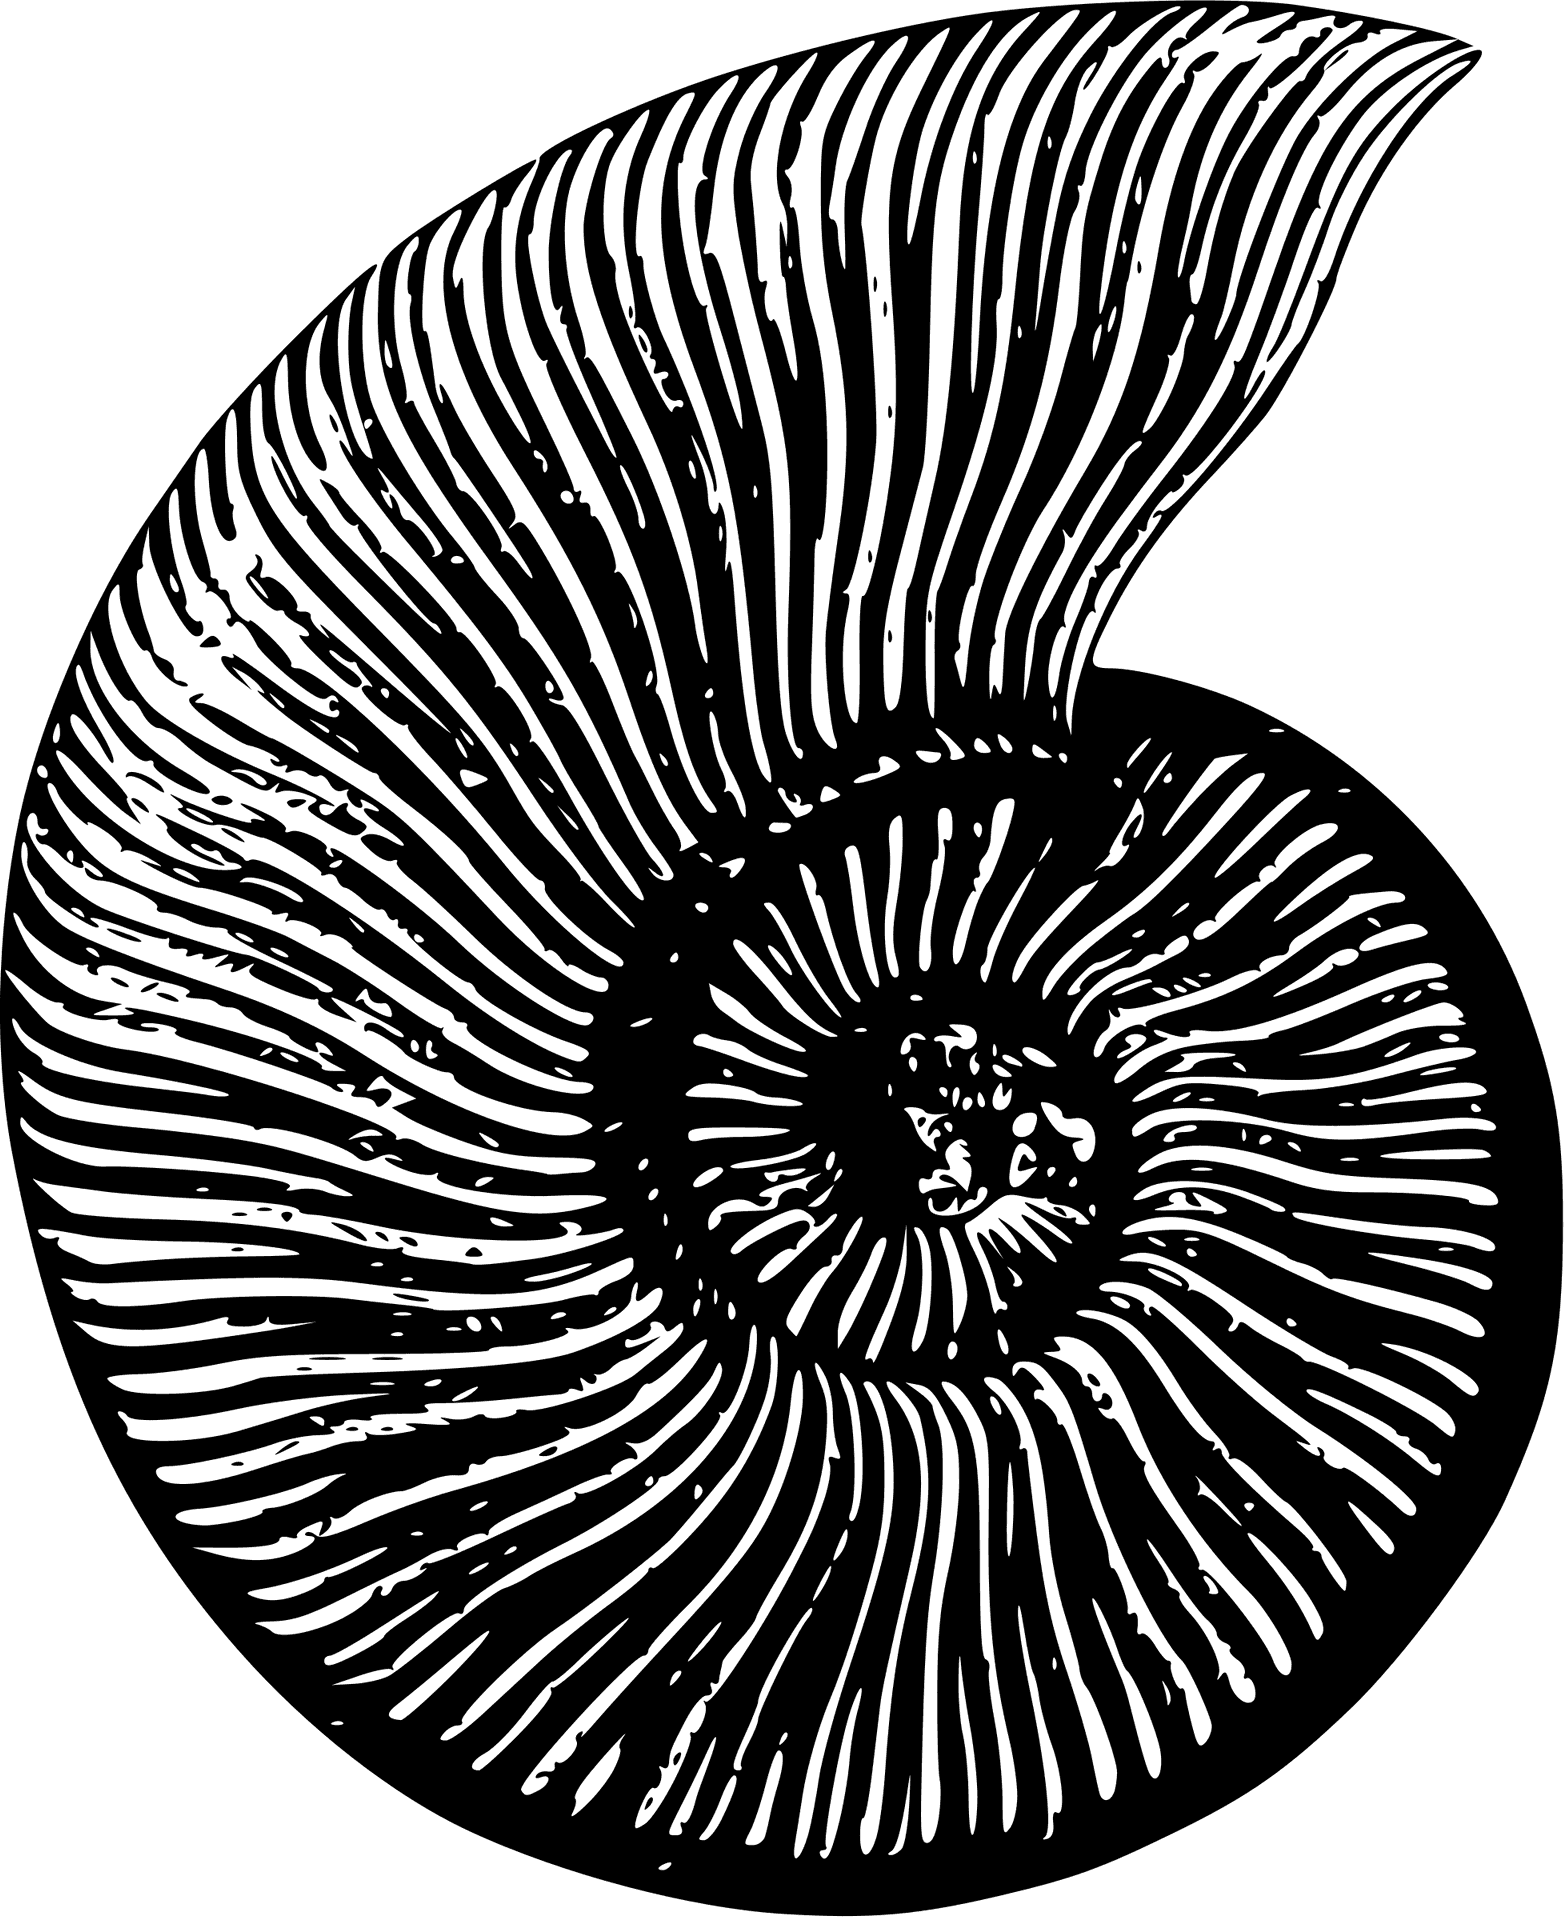 Ammonite Fossil Illustration PNG image